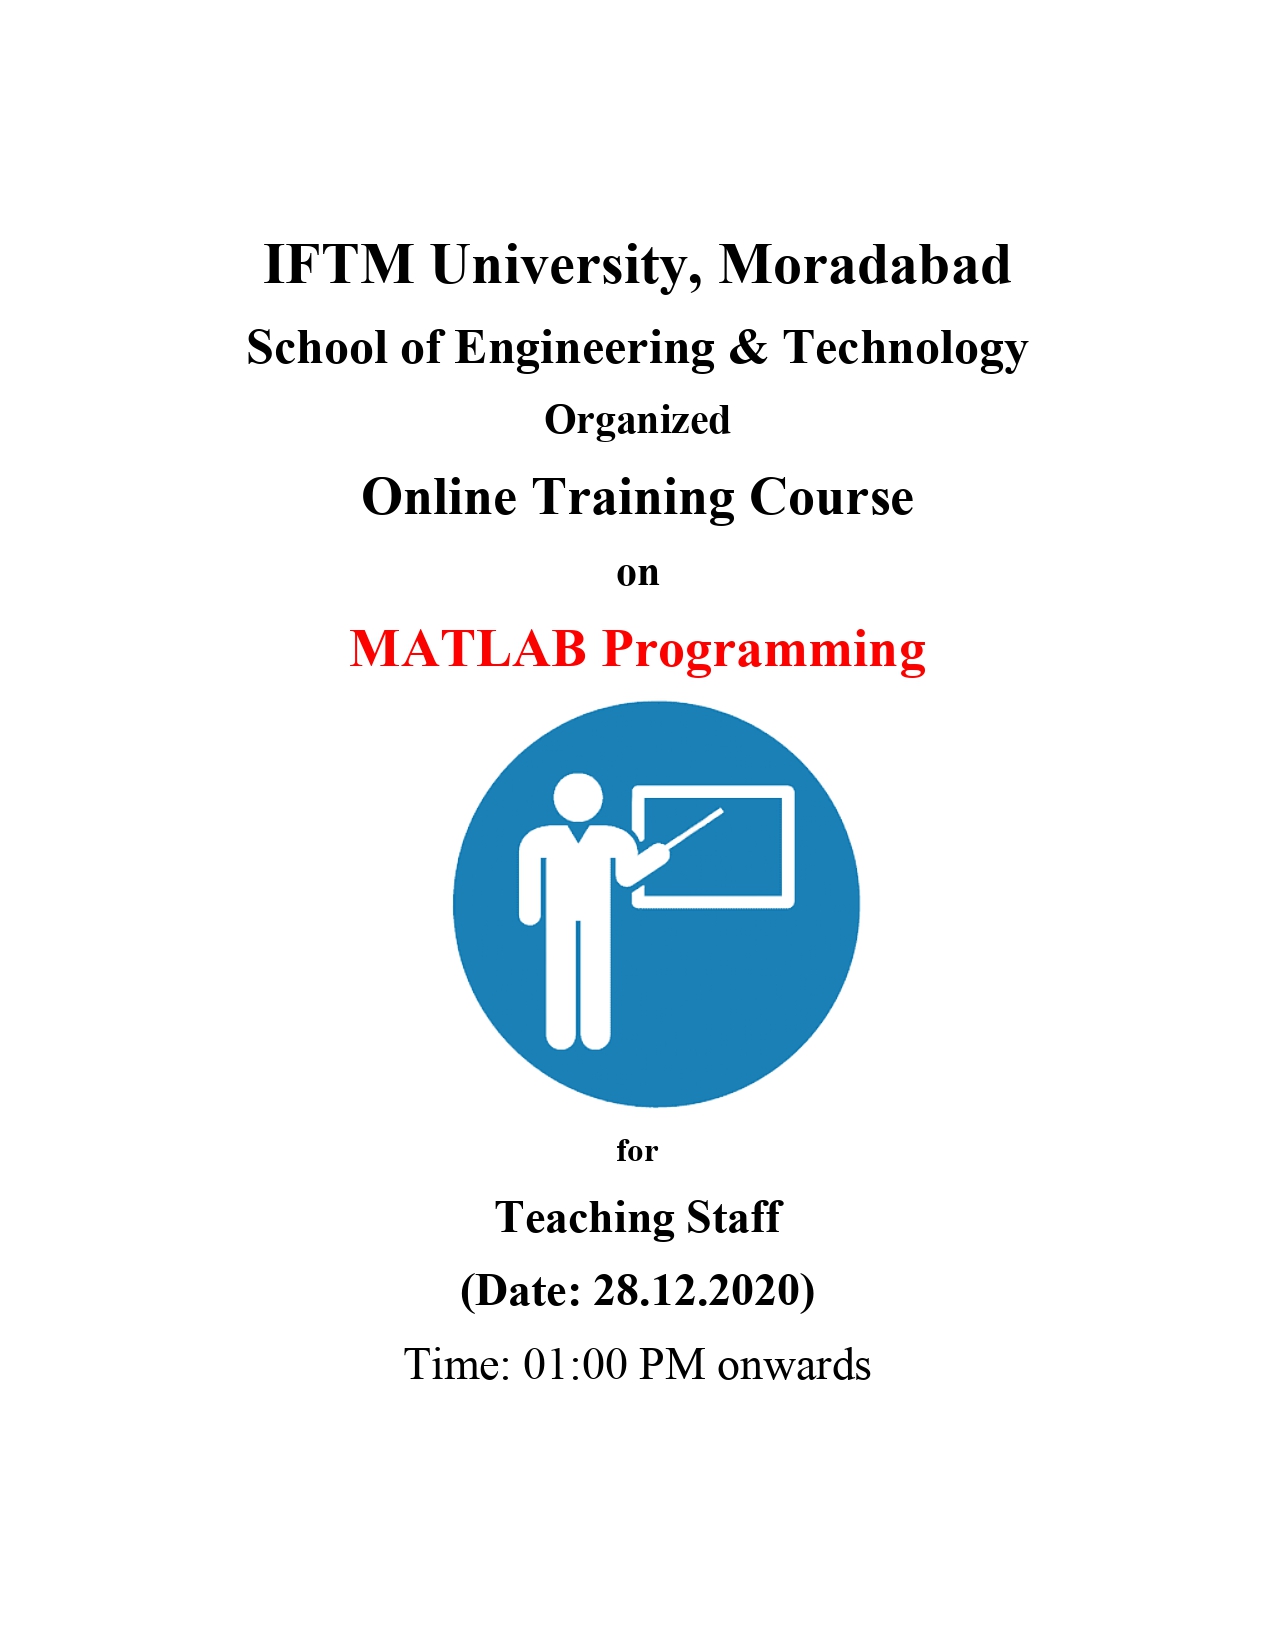 A Training Programme on MATLAB Programming